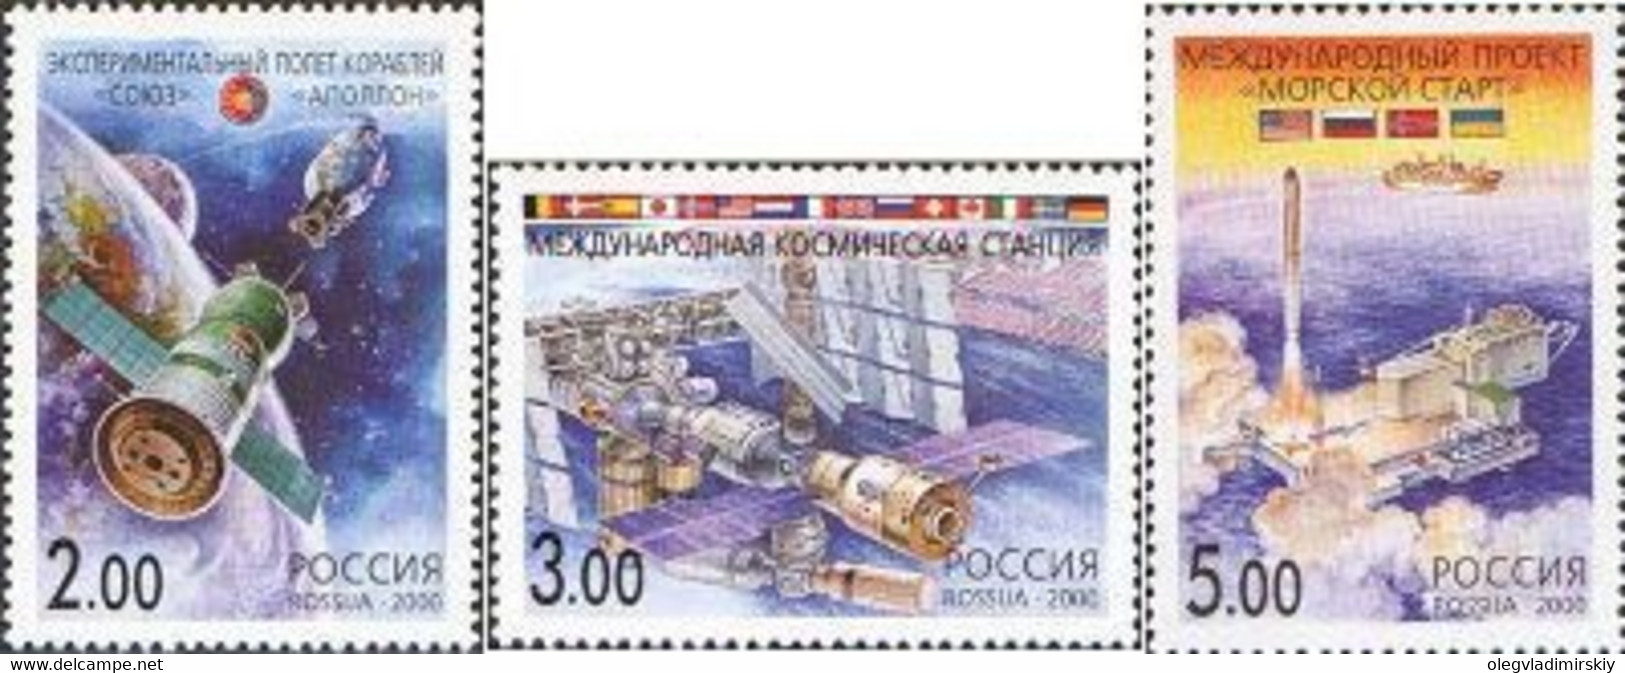 Russia 2000 Cosmonautics Day Set Of 3 Stamps - Stati Uniti